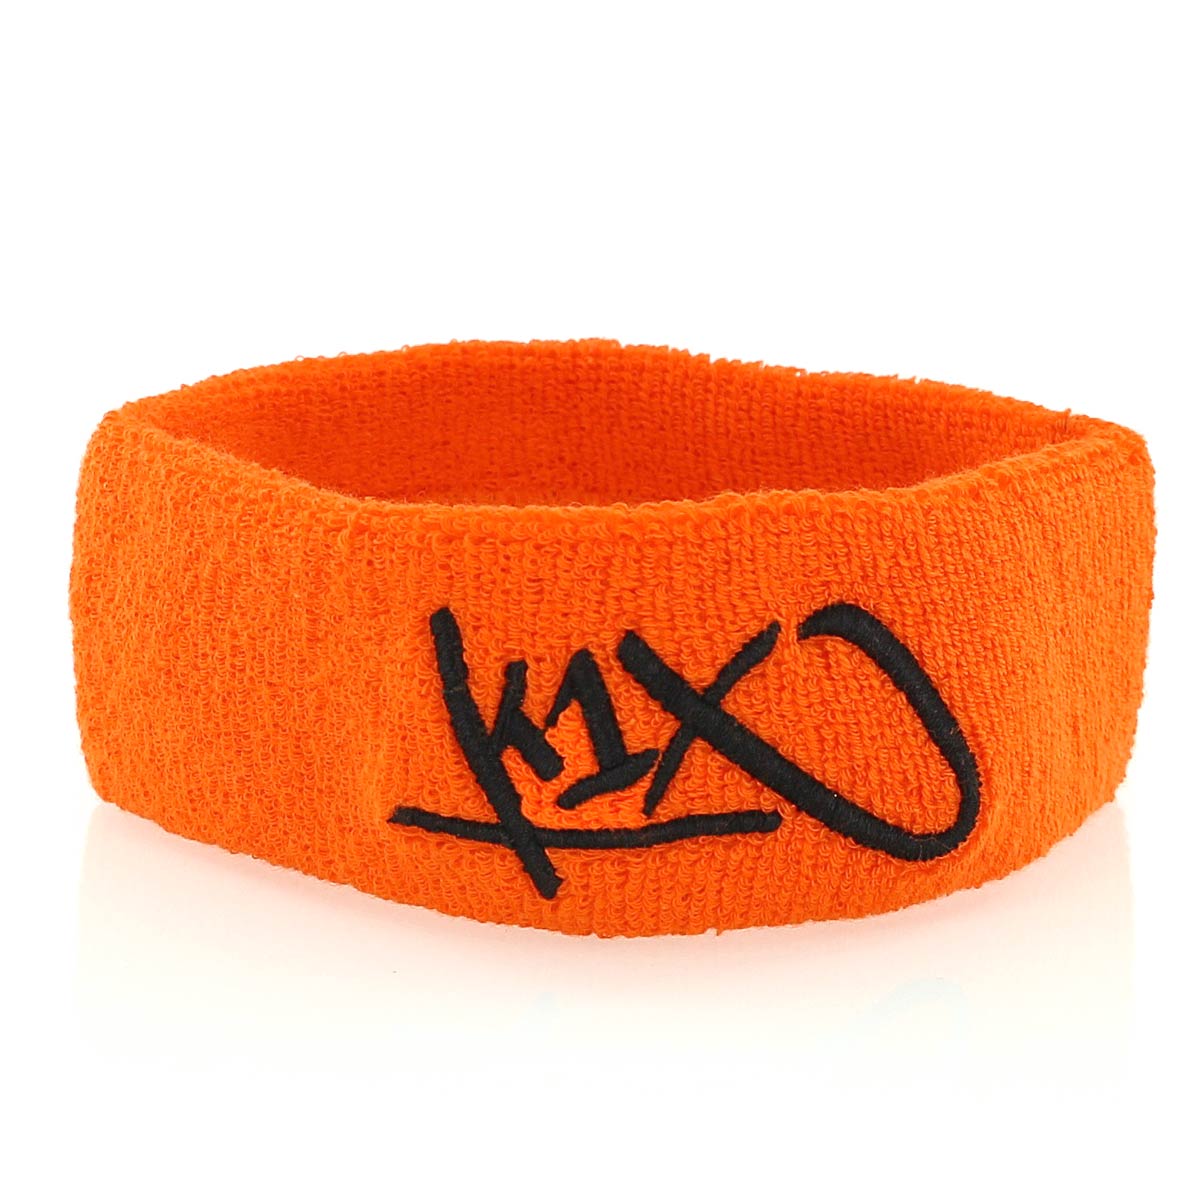 K1X Hardwood Headband, Orange